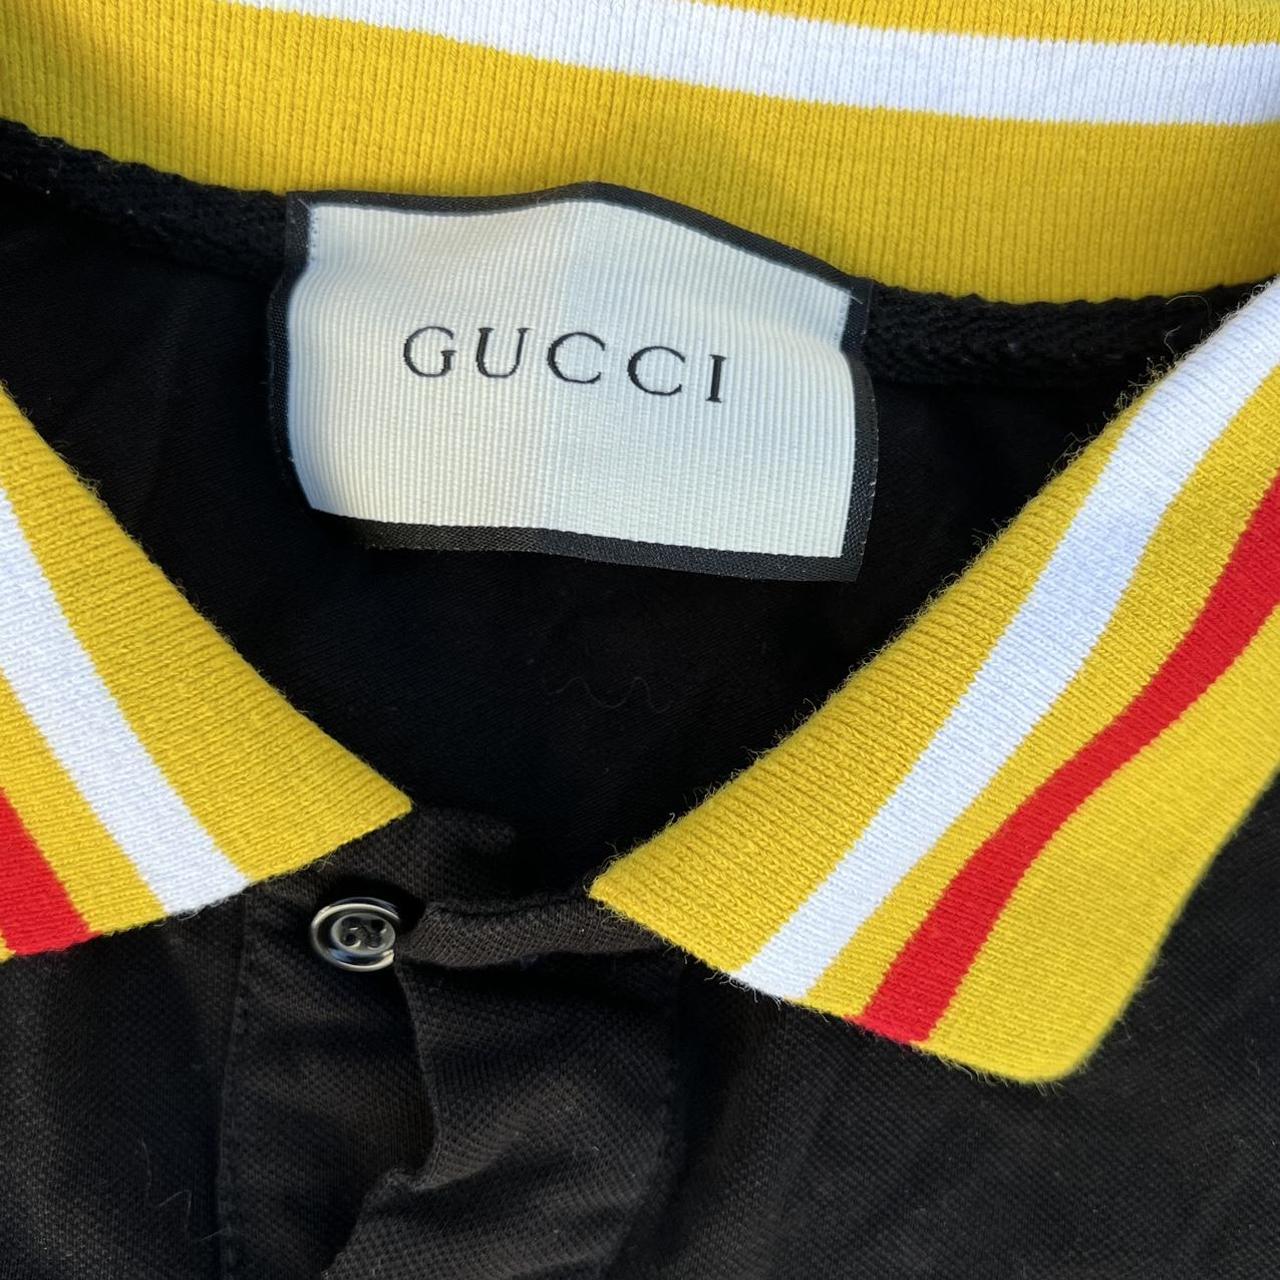 Gucci collar shirt #gucci #hype #designer - Depop